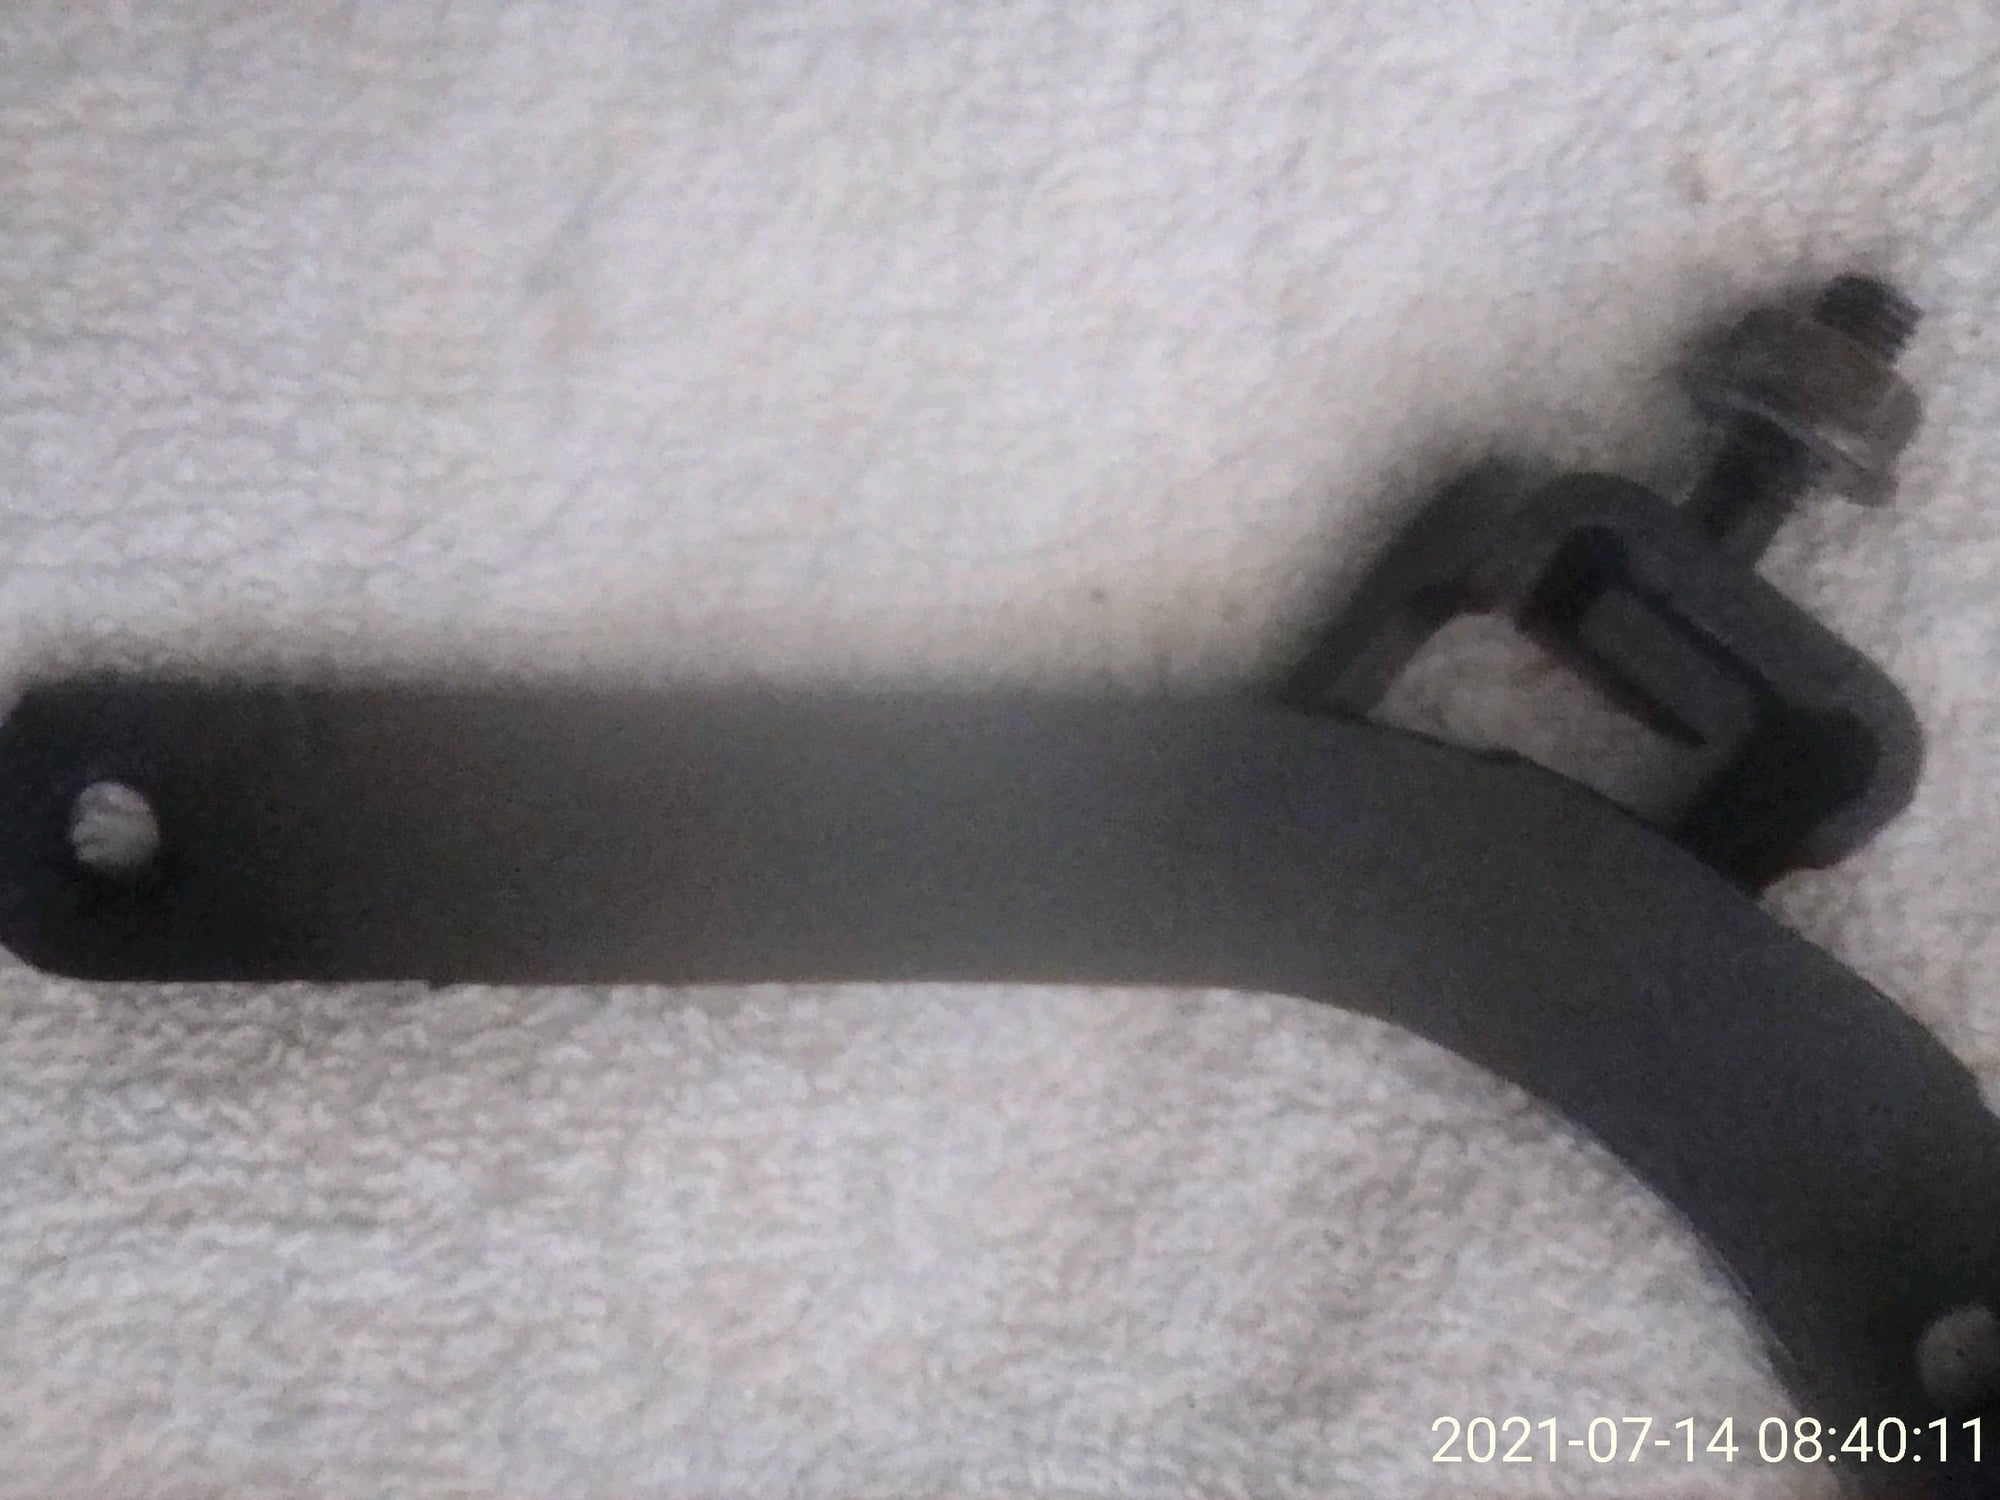 Miscellaneous - FD - OEM Alternator Bracket - Used - 1993 to 1995 Mazda RX-7 - San Jose, CA 95121, United States